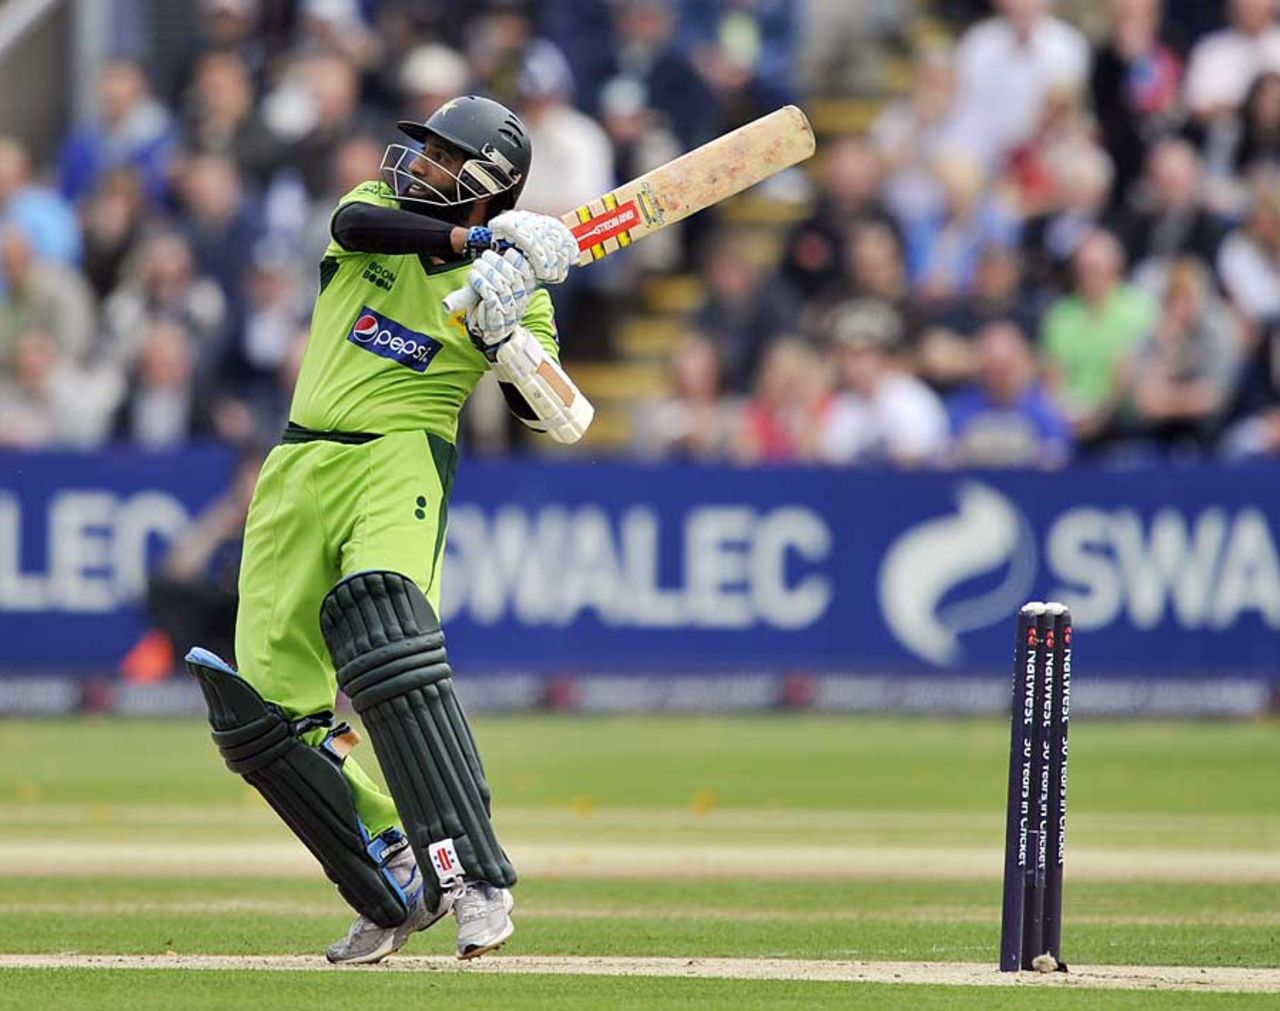 Mohammad Yousuf hit 26 off 18 balls, England v Pakistan, 1st T20I, Cardiff, September 5 2010